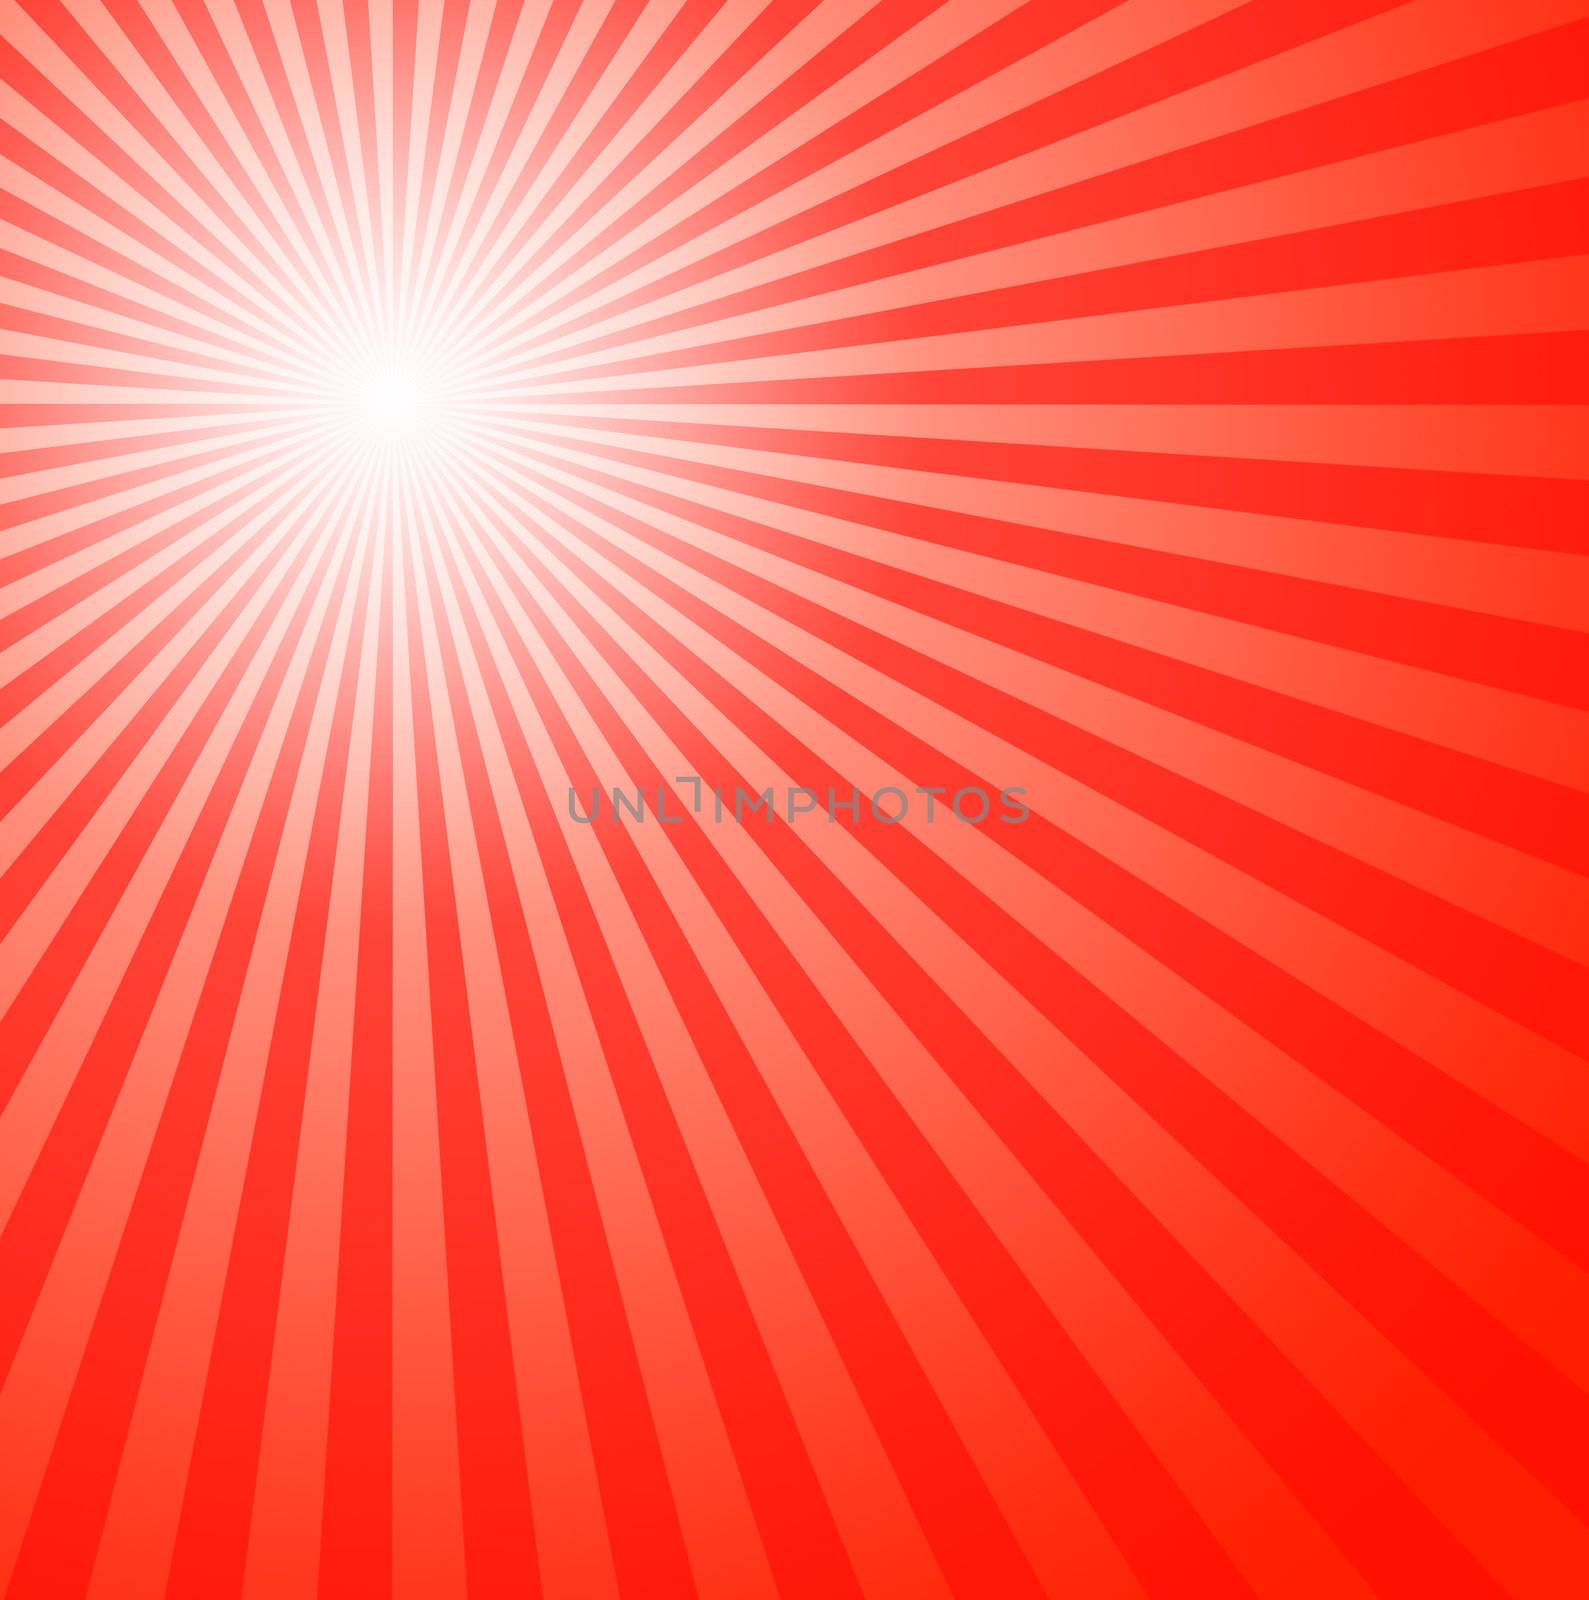 Red summer sun - abstract illustration